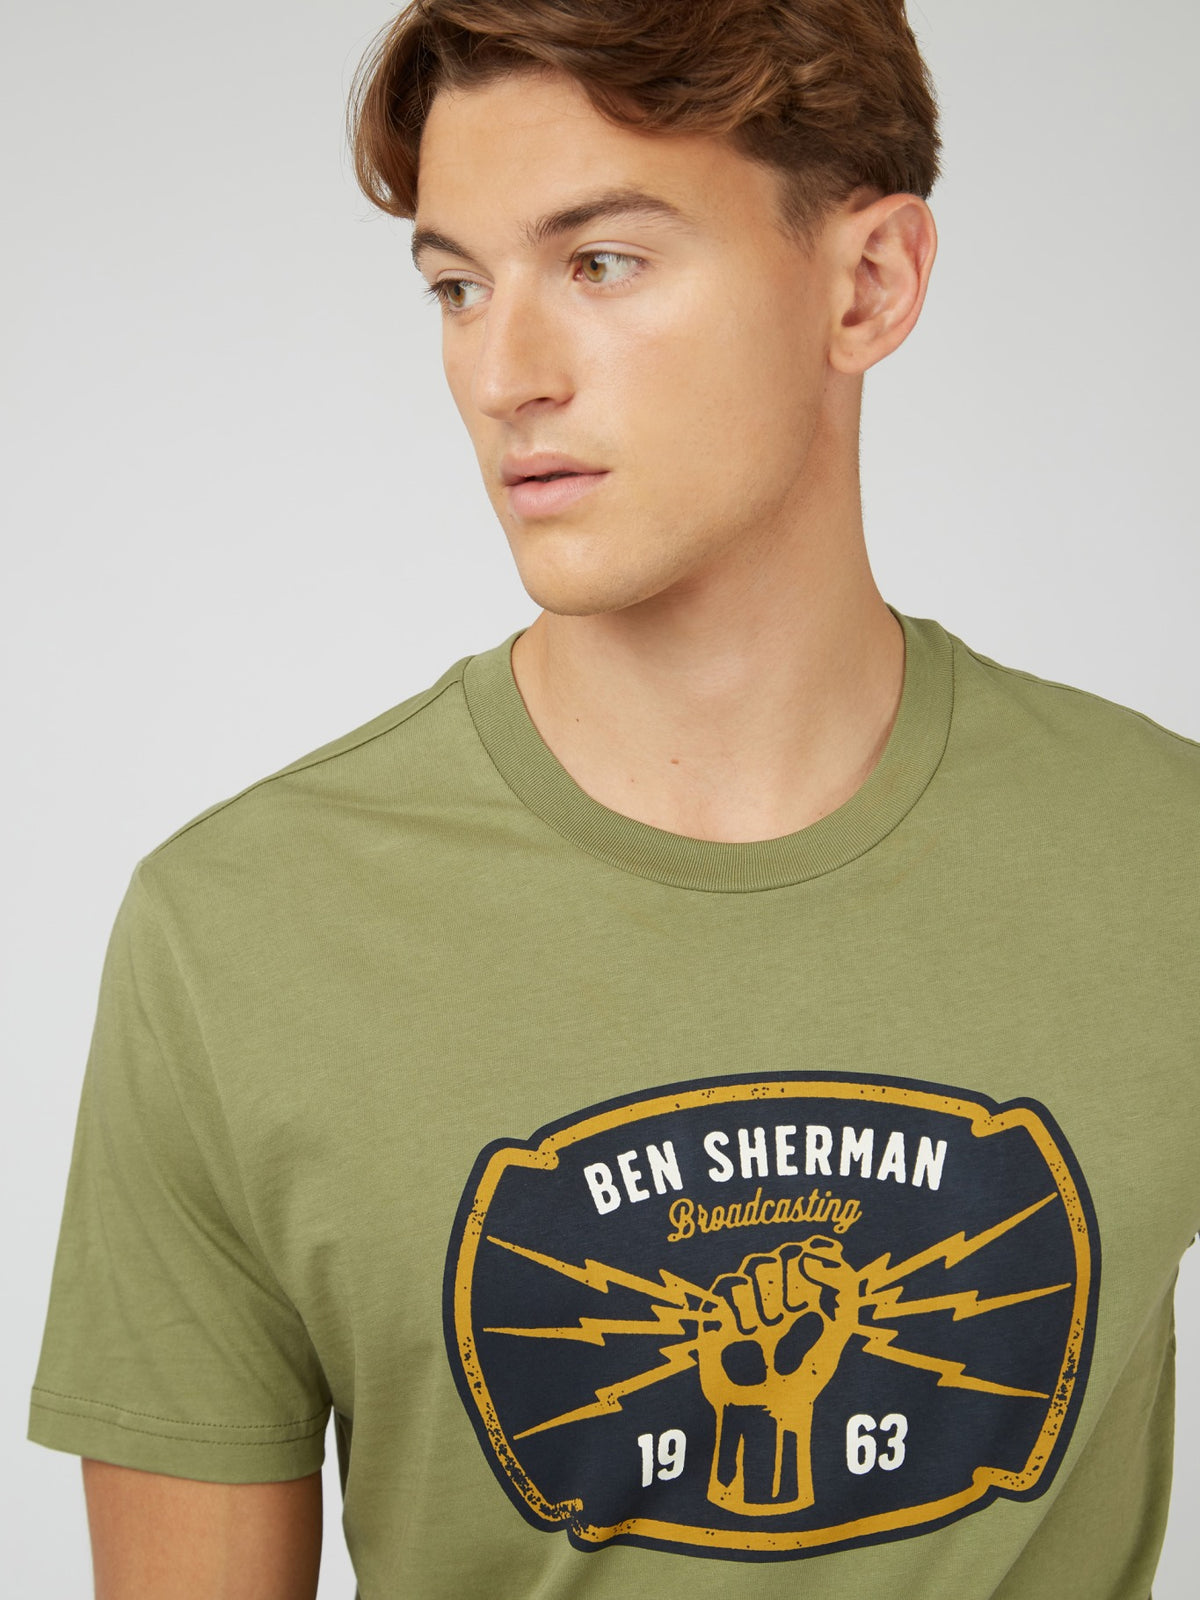 Ben Sherman Mens Broadcasting Power T-Shirt, 05, 71371, Loden